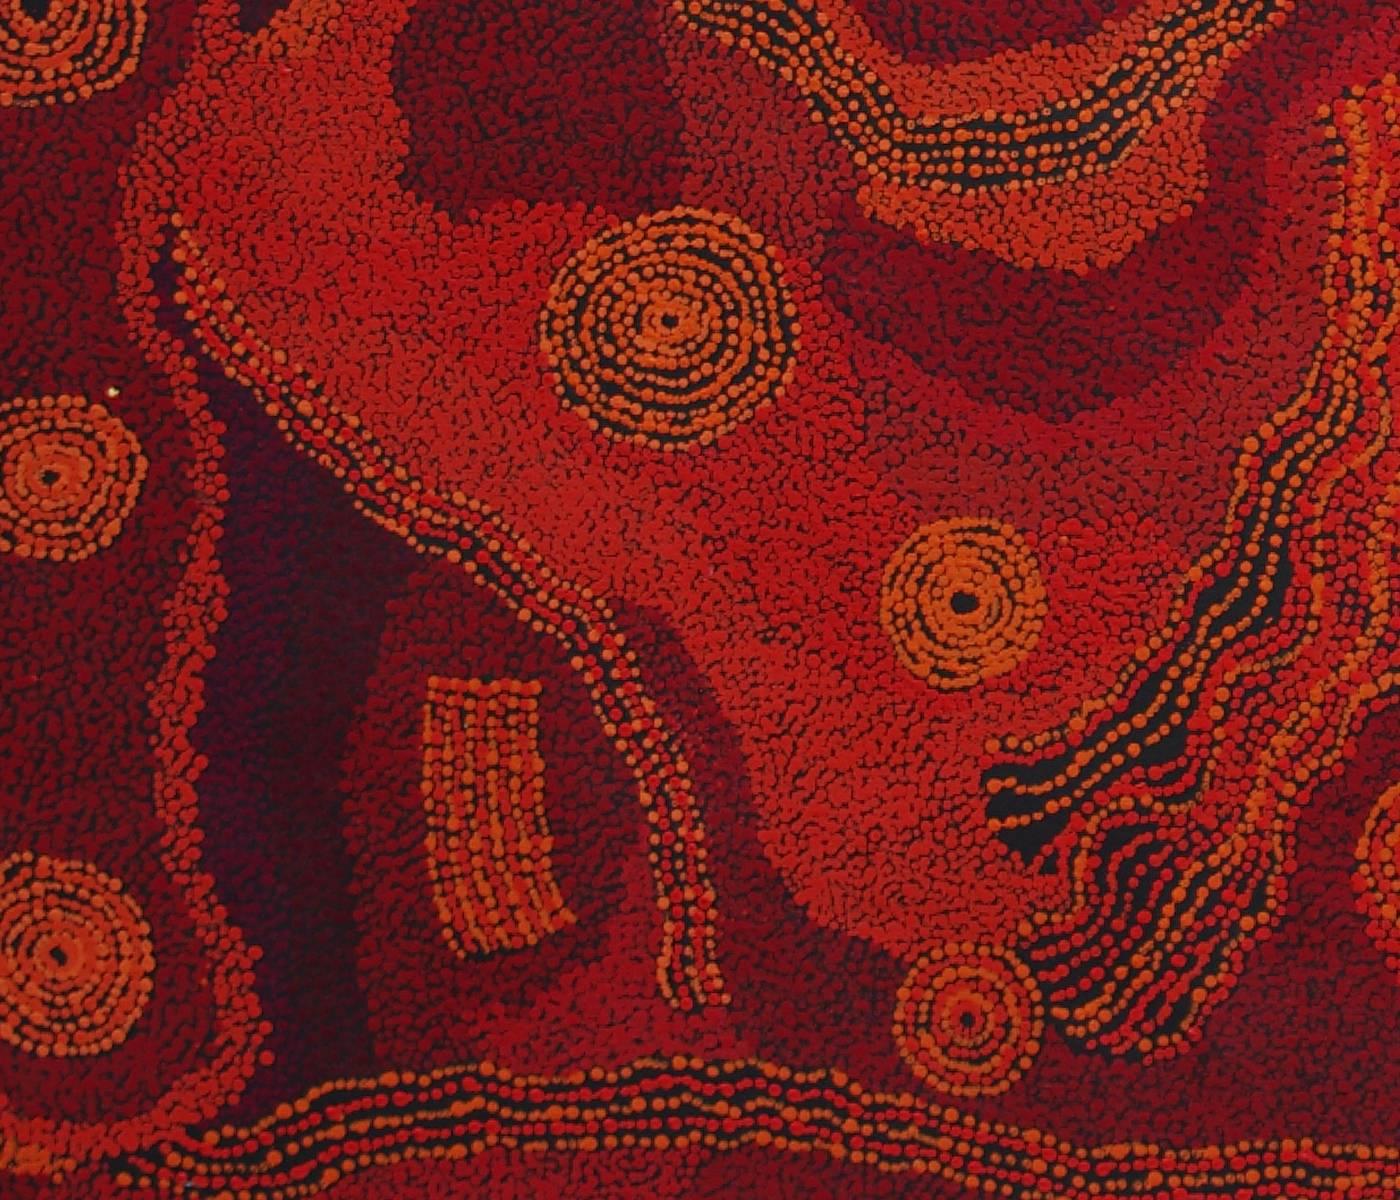 seven sisters aboriginal art